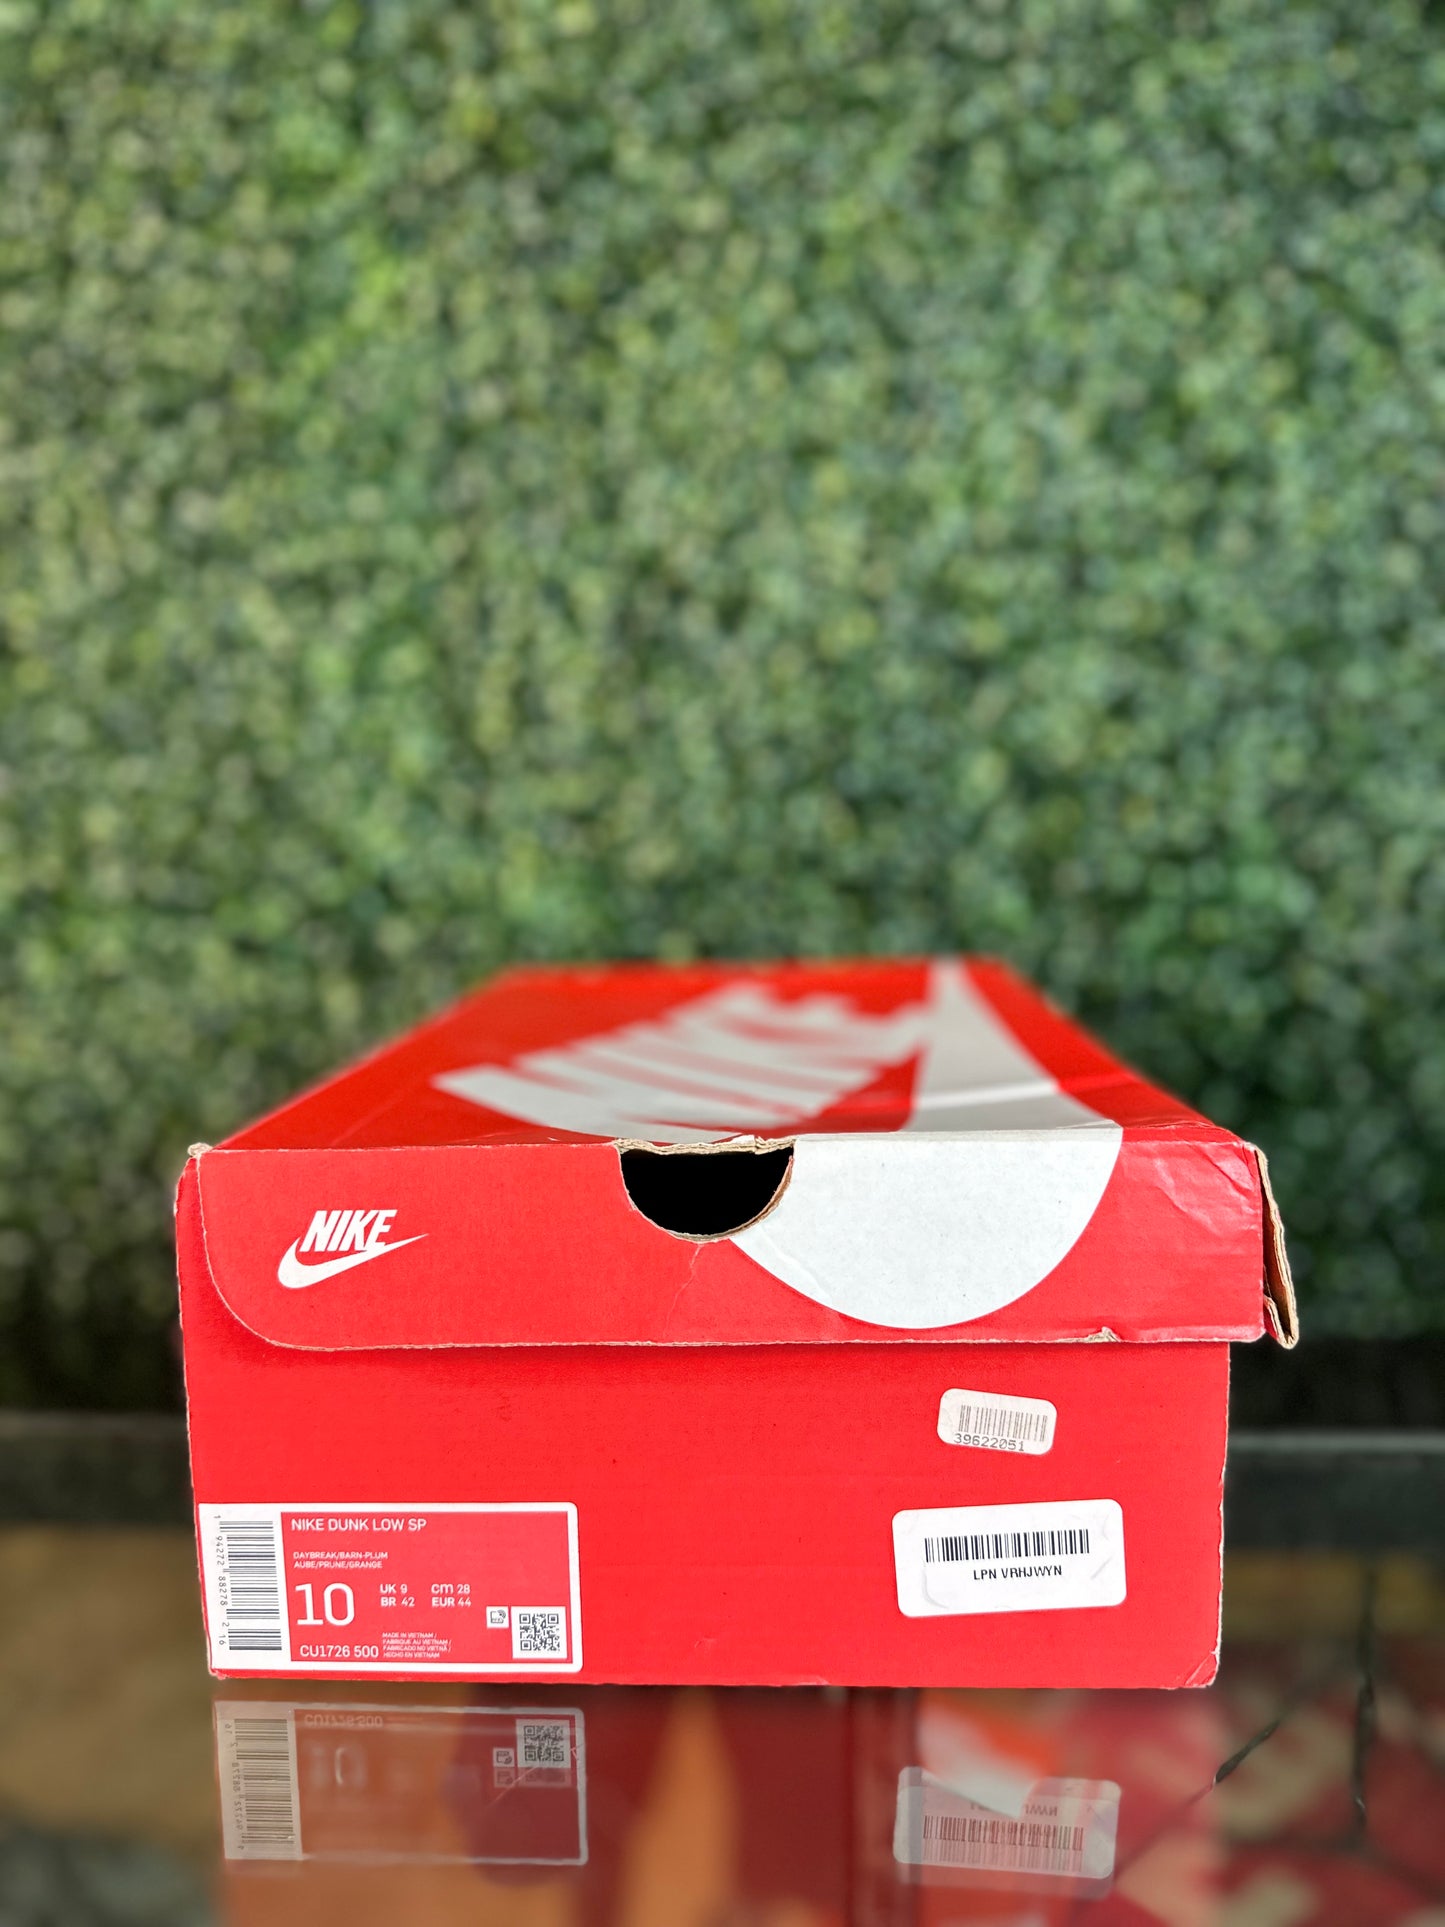 Nike Dunk Low “Plum” Retro (2020) Size 10 VNDS OG